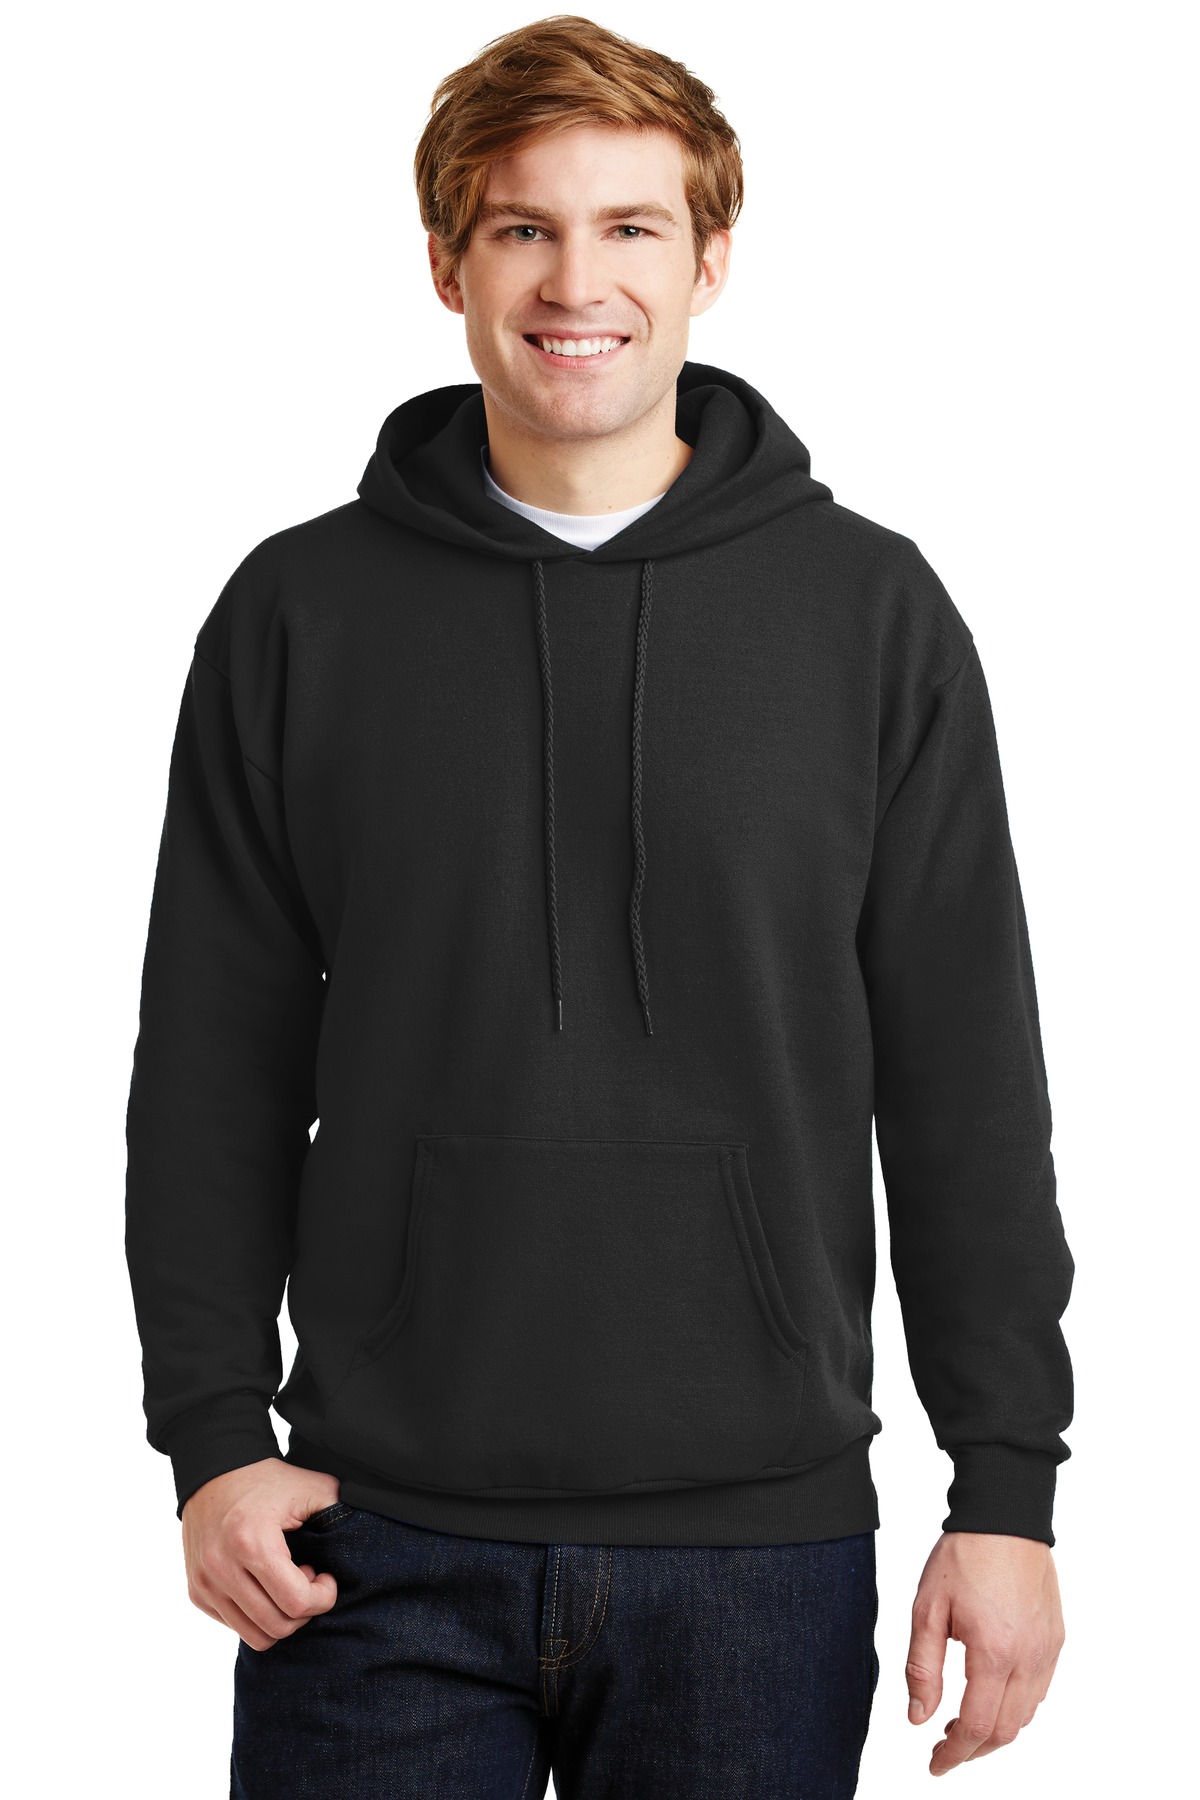 Hanes P170 | EcoSmart ® - Pullover Hooded Sweatshirt | ShirtSpace